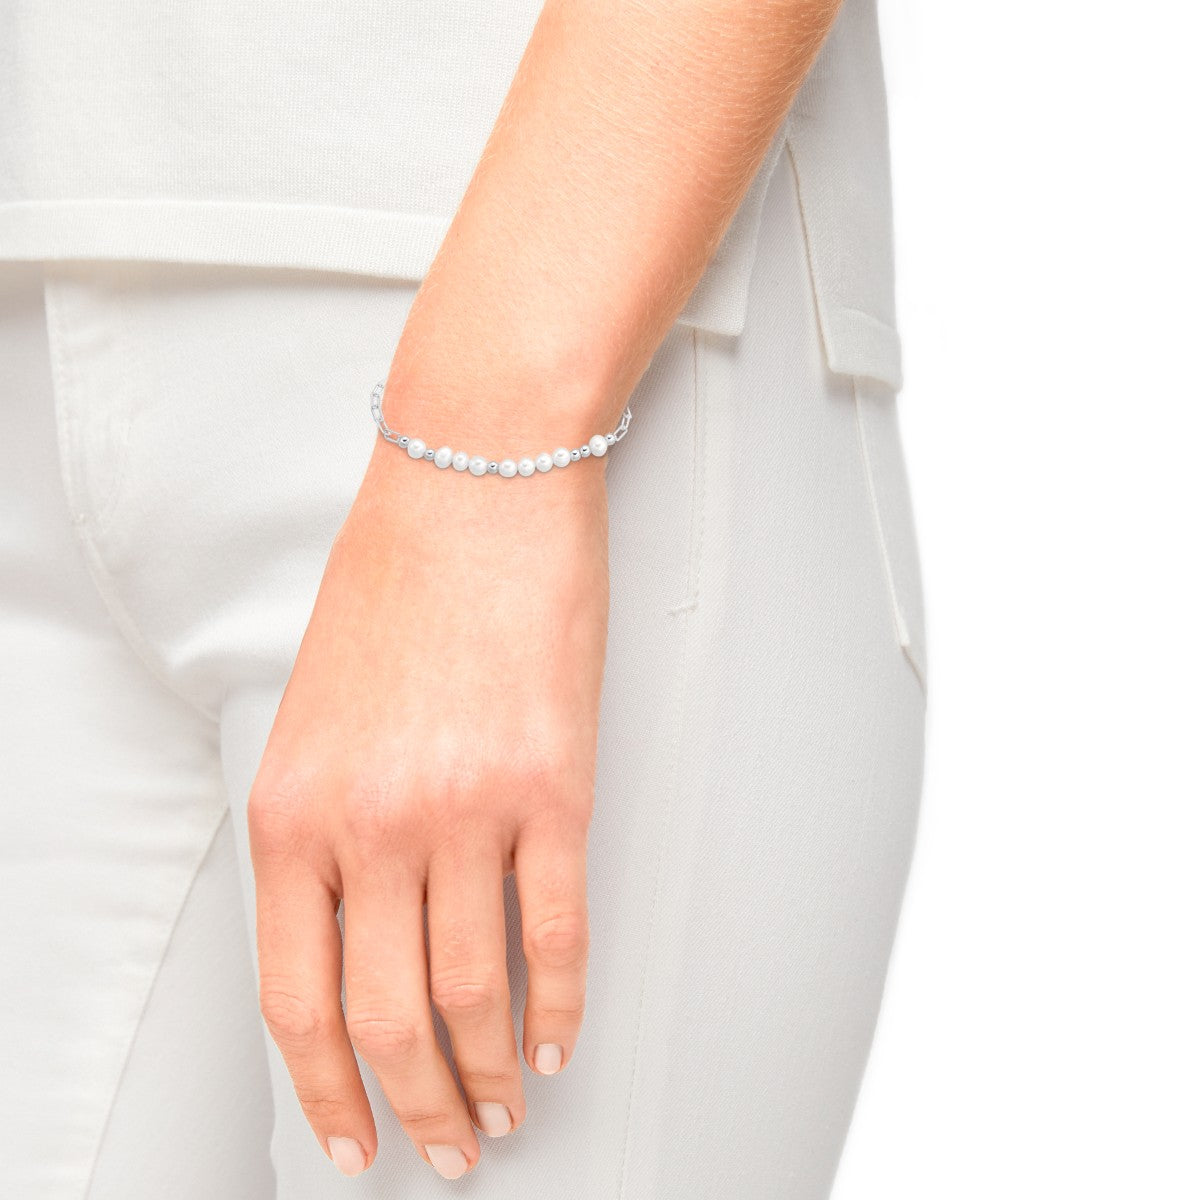 Damen Armband – Perlen Jewel 2034891 Silber s.Oliver Preiswert24 Armkette